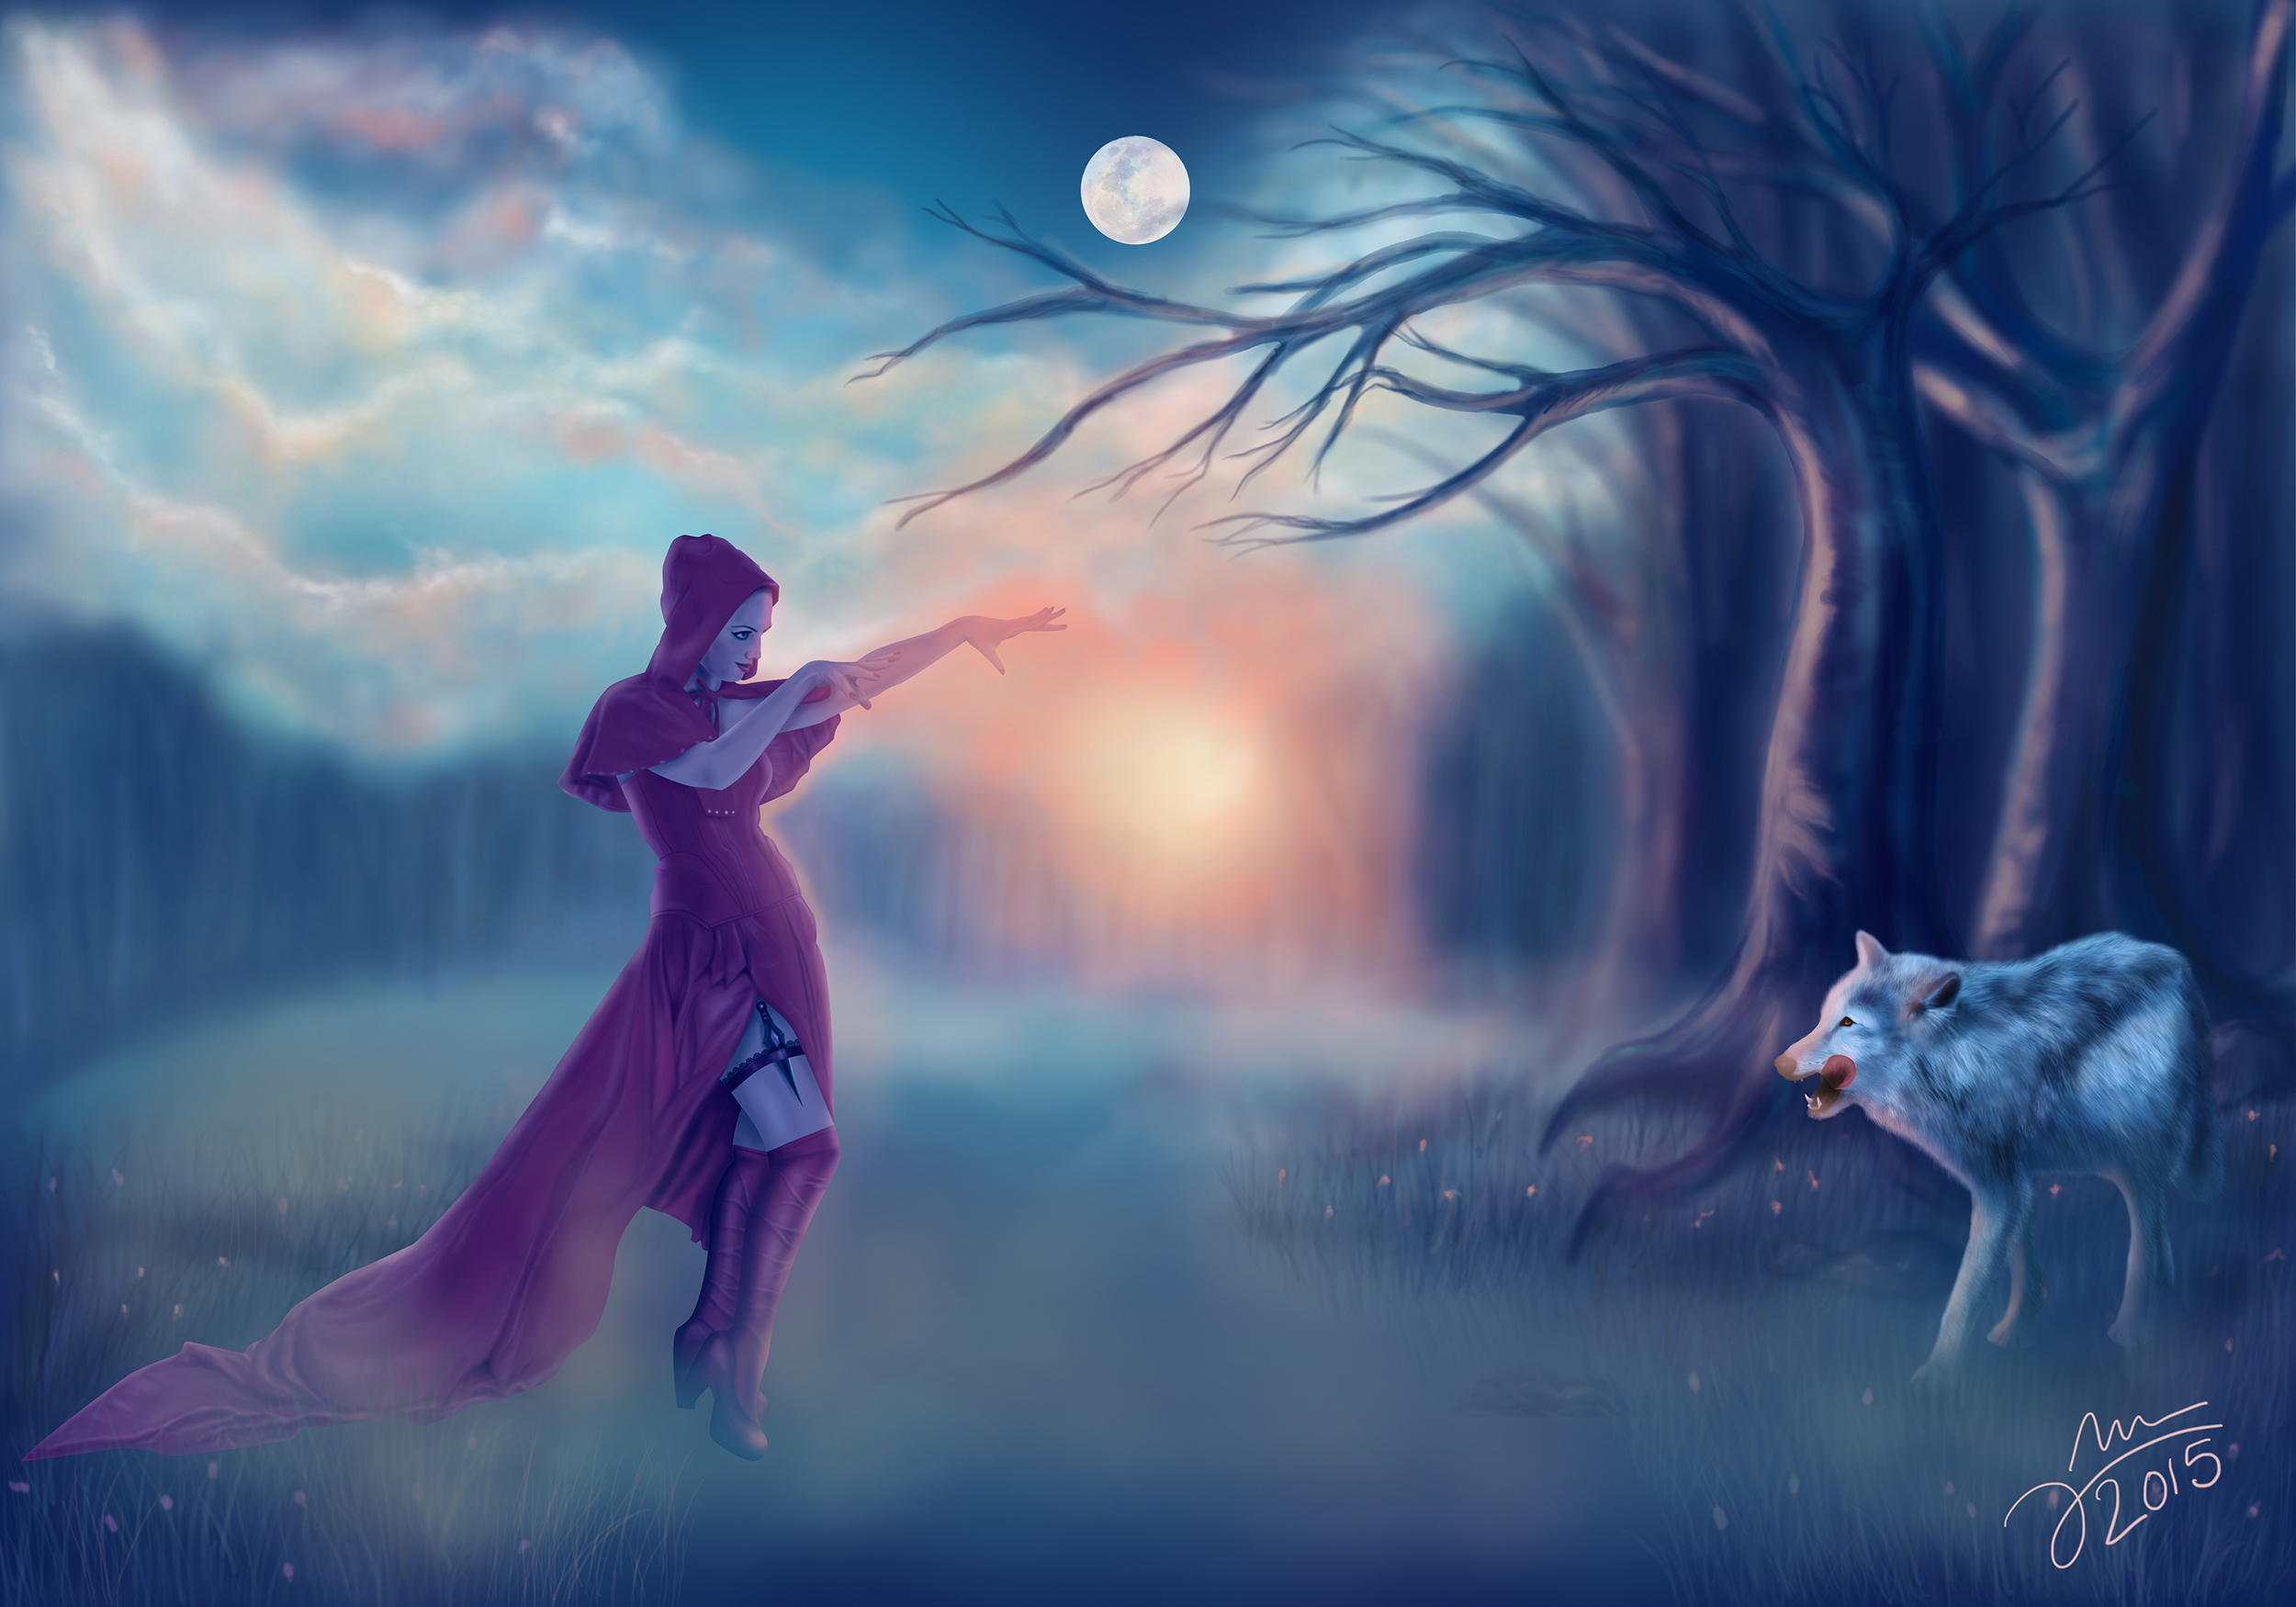 Fantasy Red Riding Hood HD Wallpaper by Arkel666